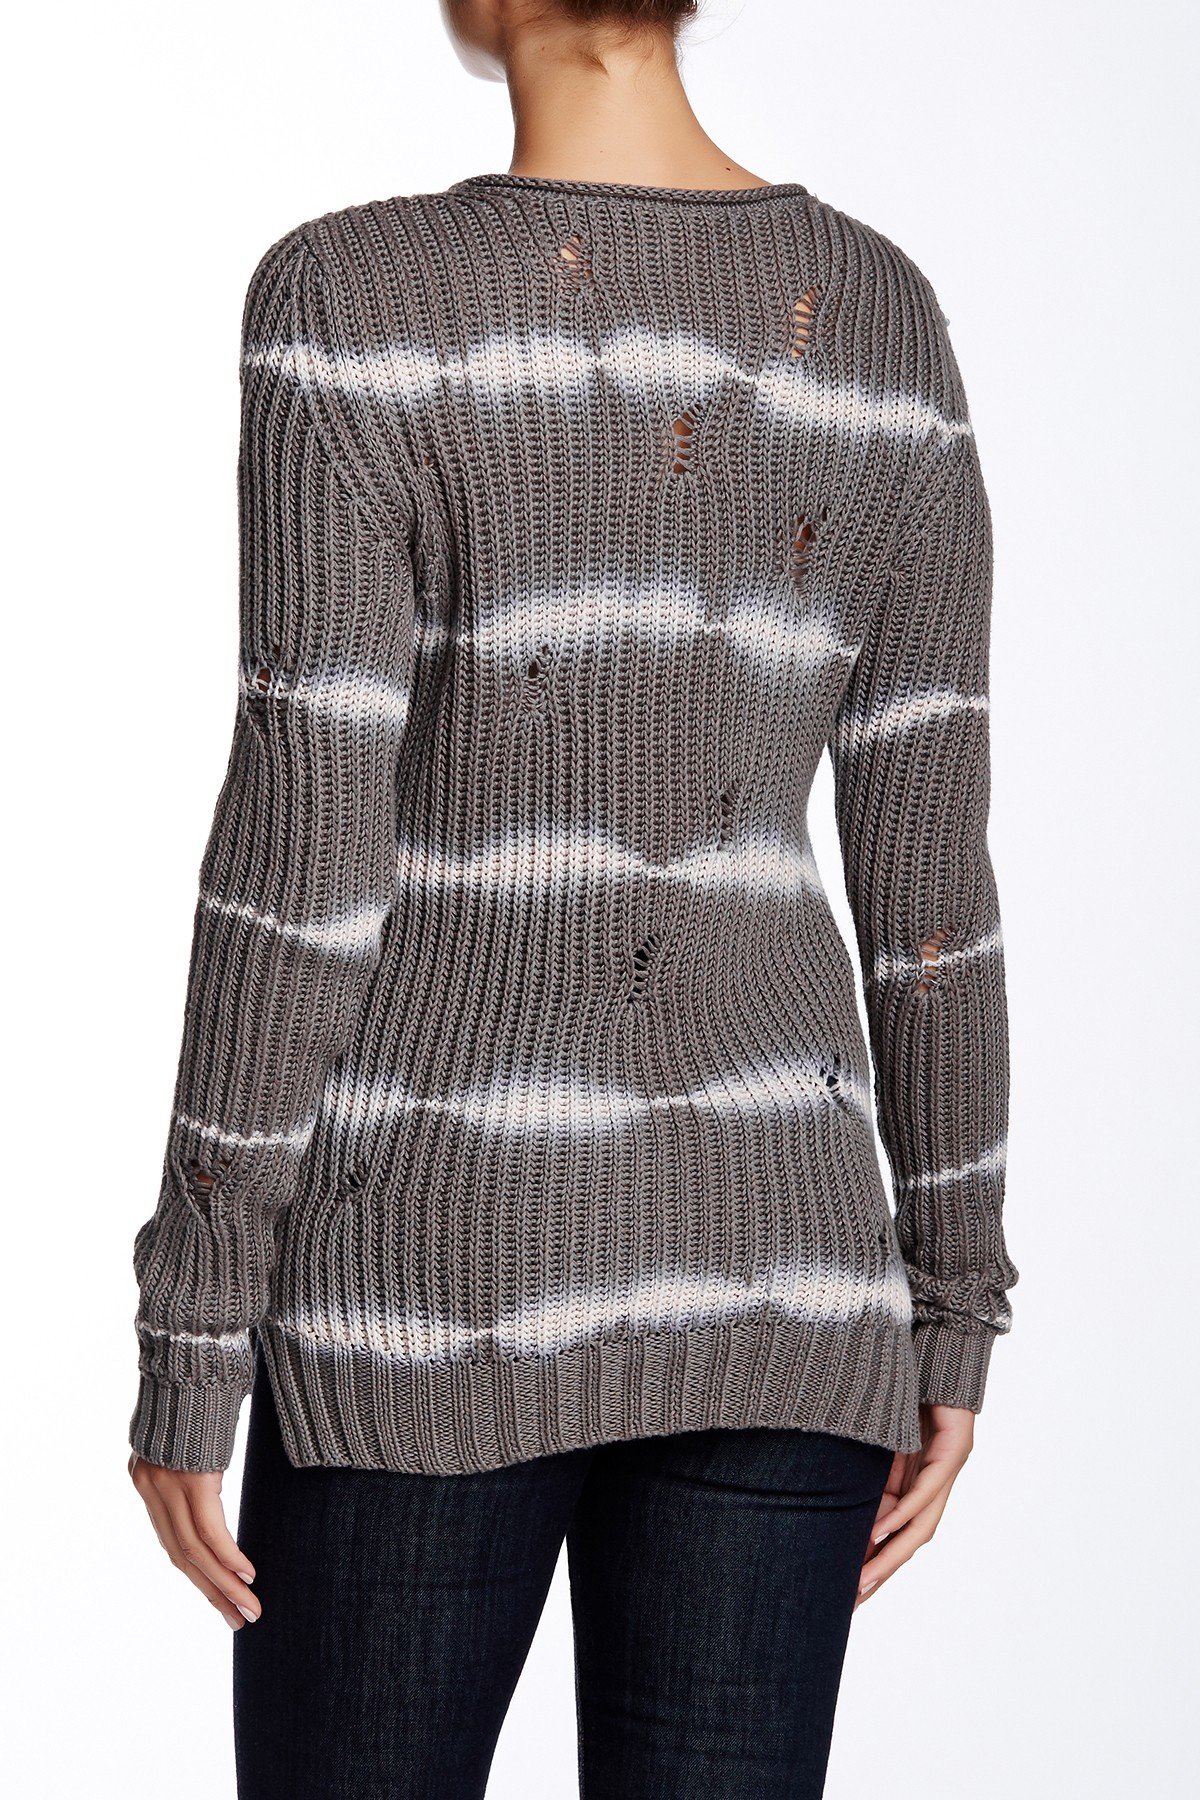 Autumn Cashmere Tie-dye Torn Stockinette Stitch Sweater in Gray - Lyst